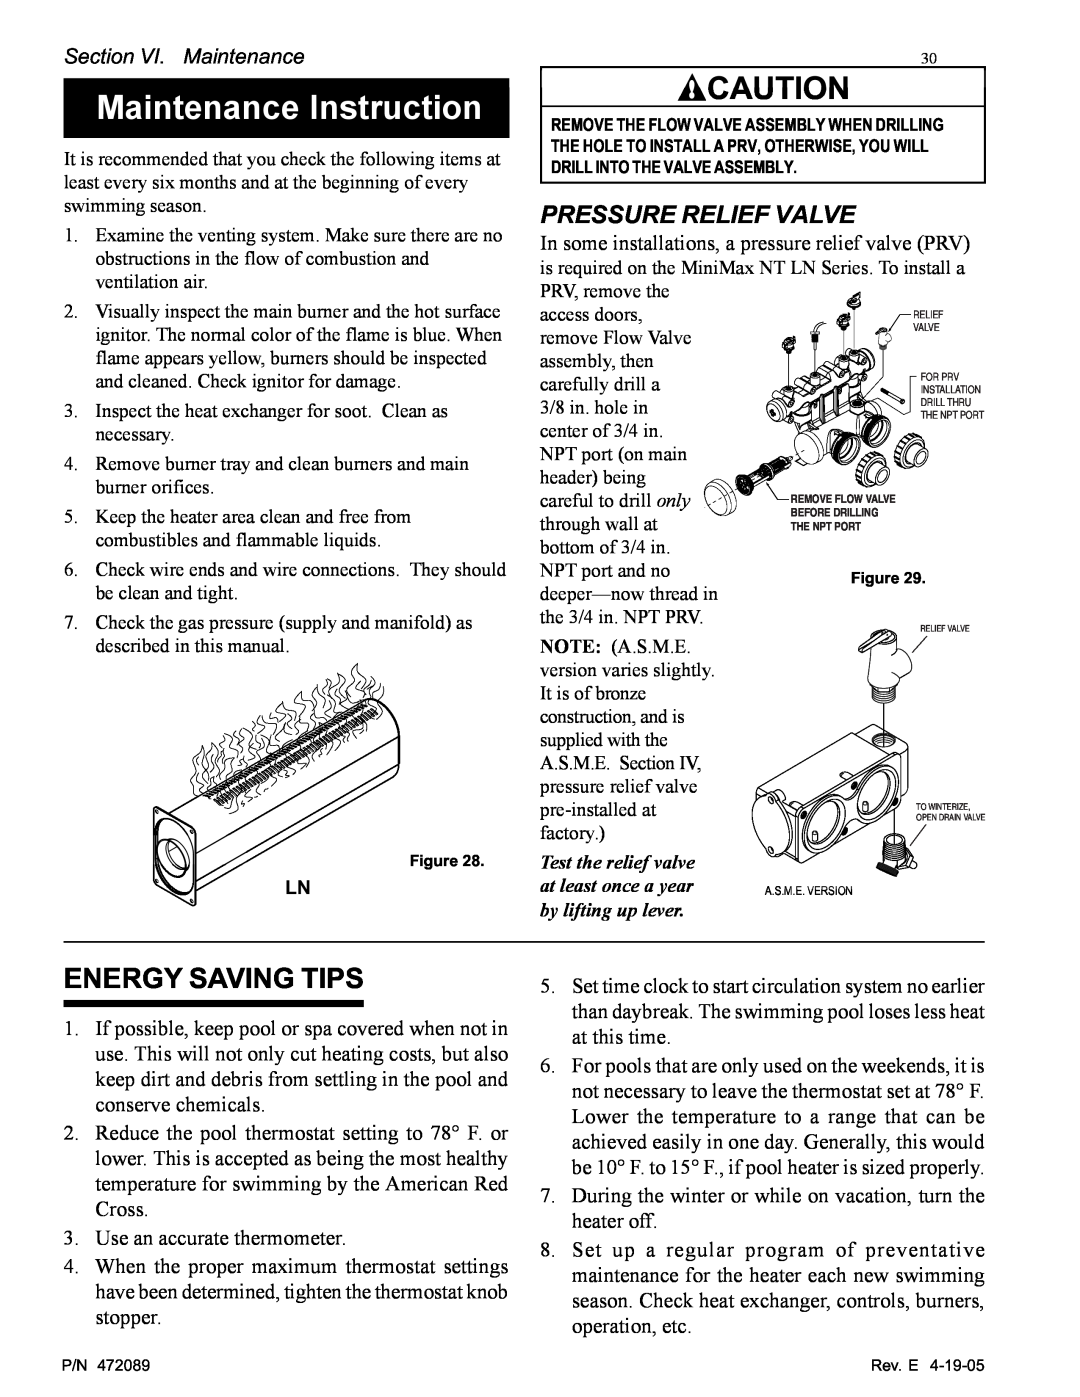 Pentair MiniMax NT LN installation manual Energy Saving Tips, Maintenance Instruction 